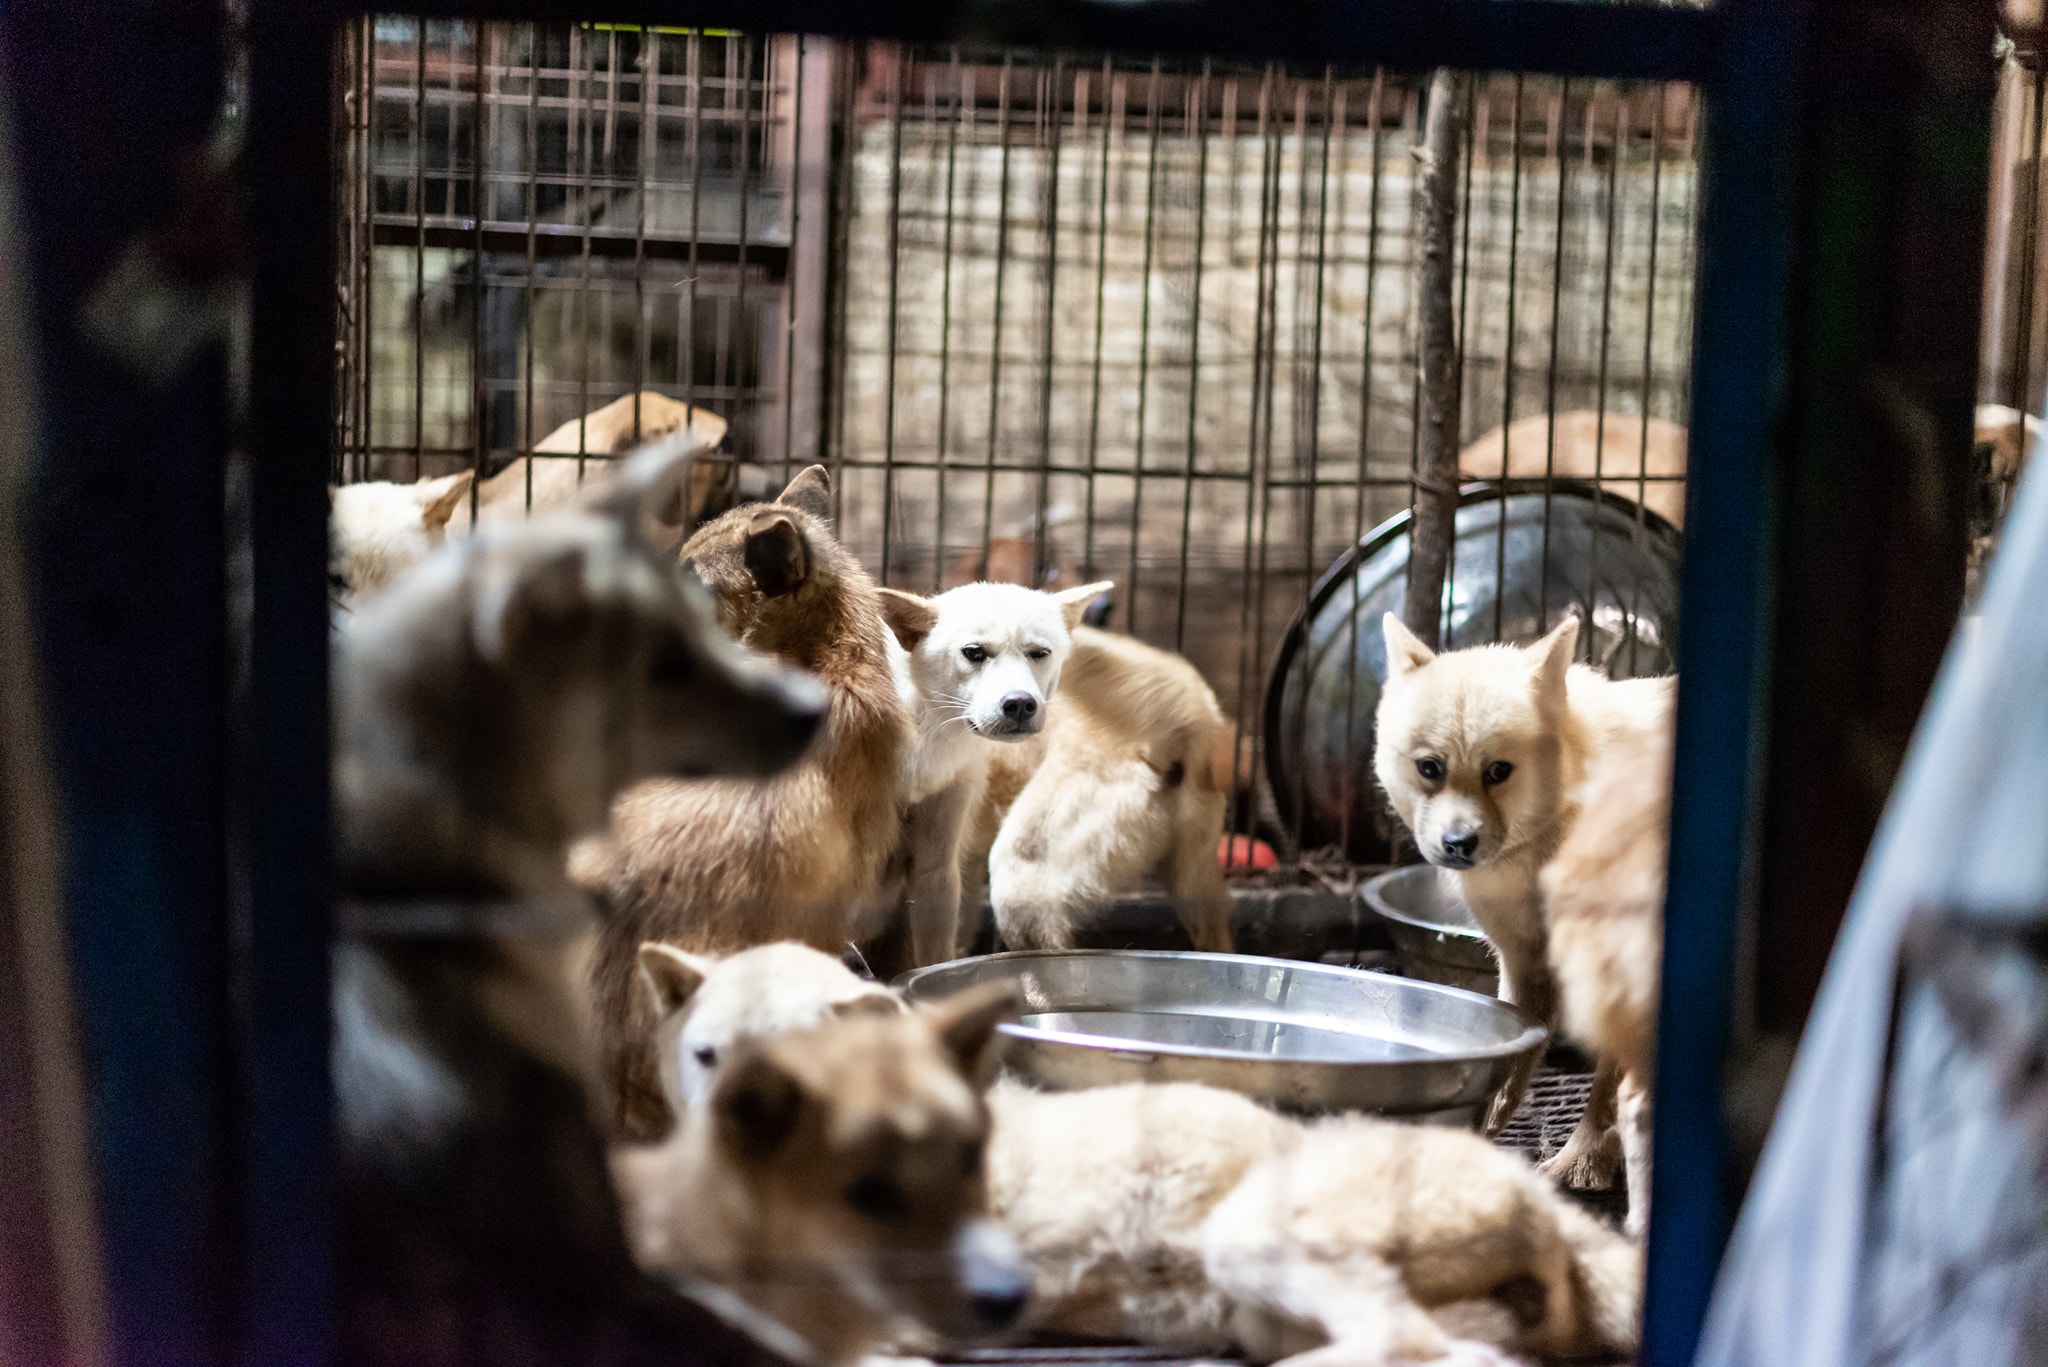 https://koreandogs.org/care-press-conference-exposing-seongnam-taepyeong-dong-illegal-dog-slaughterhouses/?utm_source=sendinblue&utm_campaign=Exposing_Seongnams_Illegal_Dog_Slaughterhouses__New_Calls_for_Action!&utm_medium=email